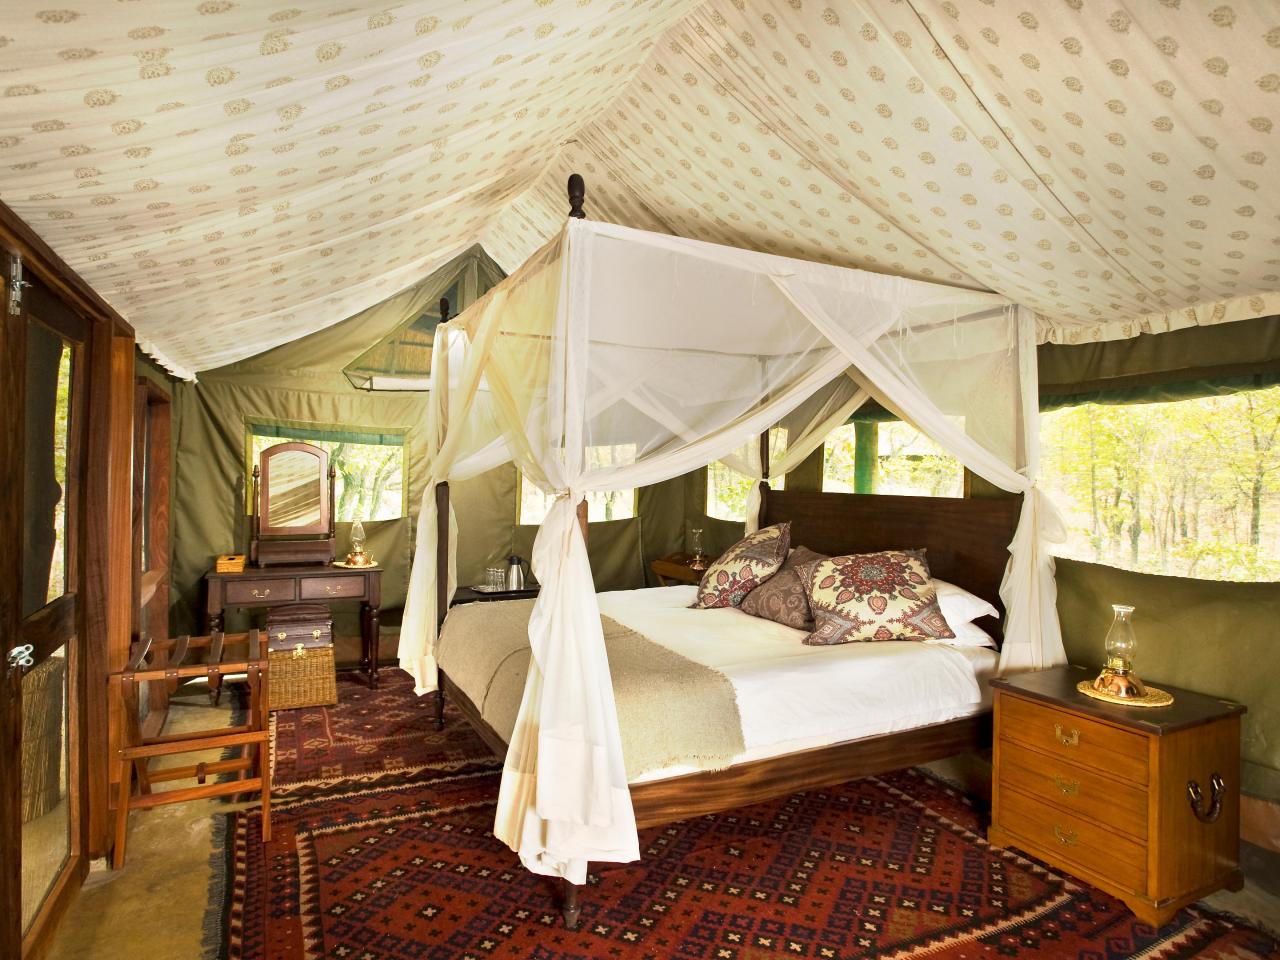 CI-Africa-Bushcamp-Zungulila_bedroom-tent-fabbric-outdoor-canvas_s4x3.jpg.rend.hgtvcom.1280.960.jpeg